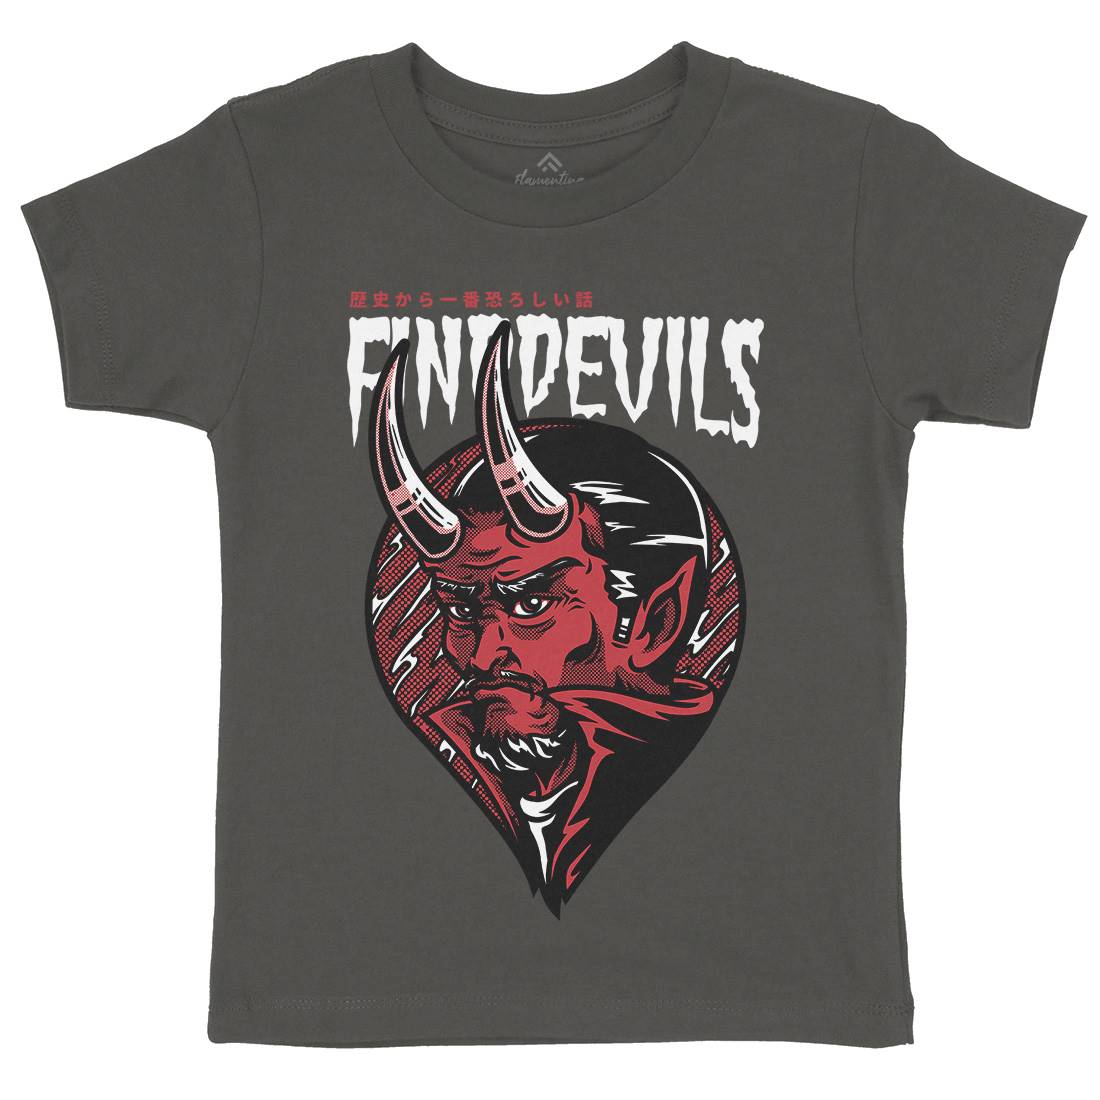 Find Devils Kids Crew Neck T-Shirt Horror D775